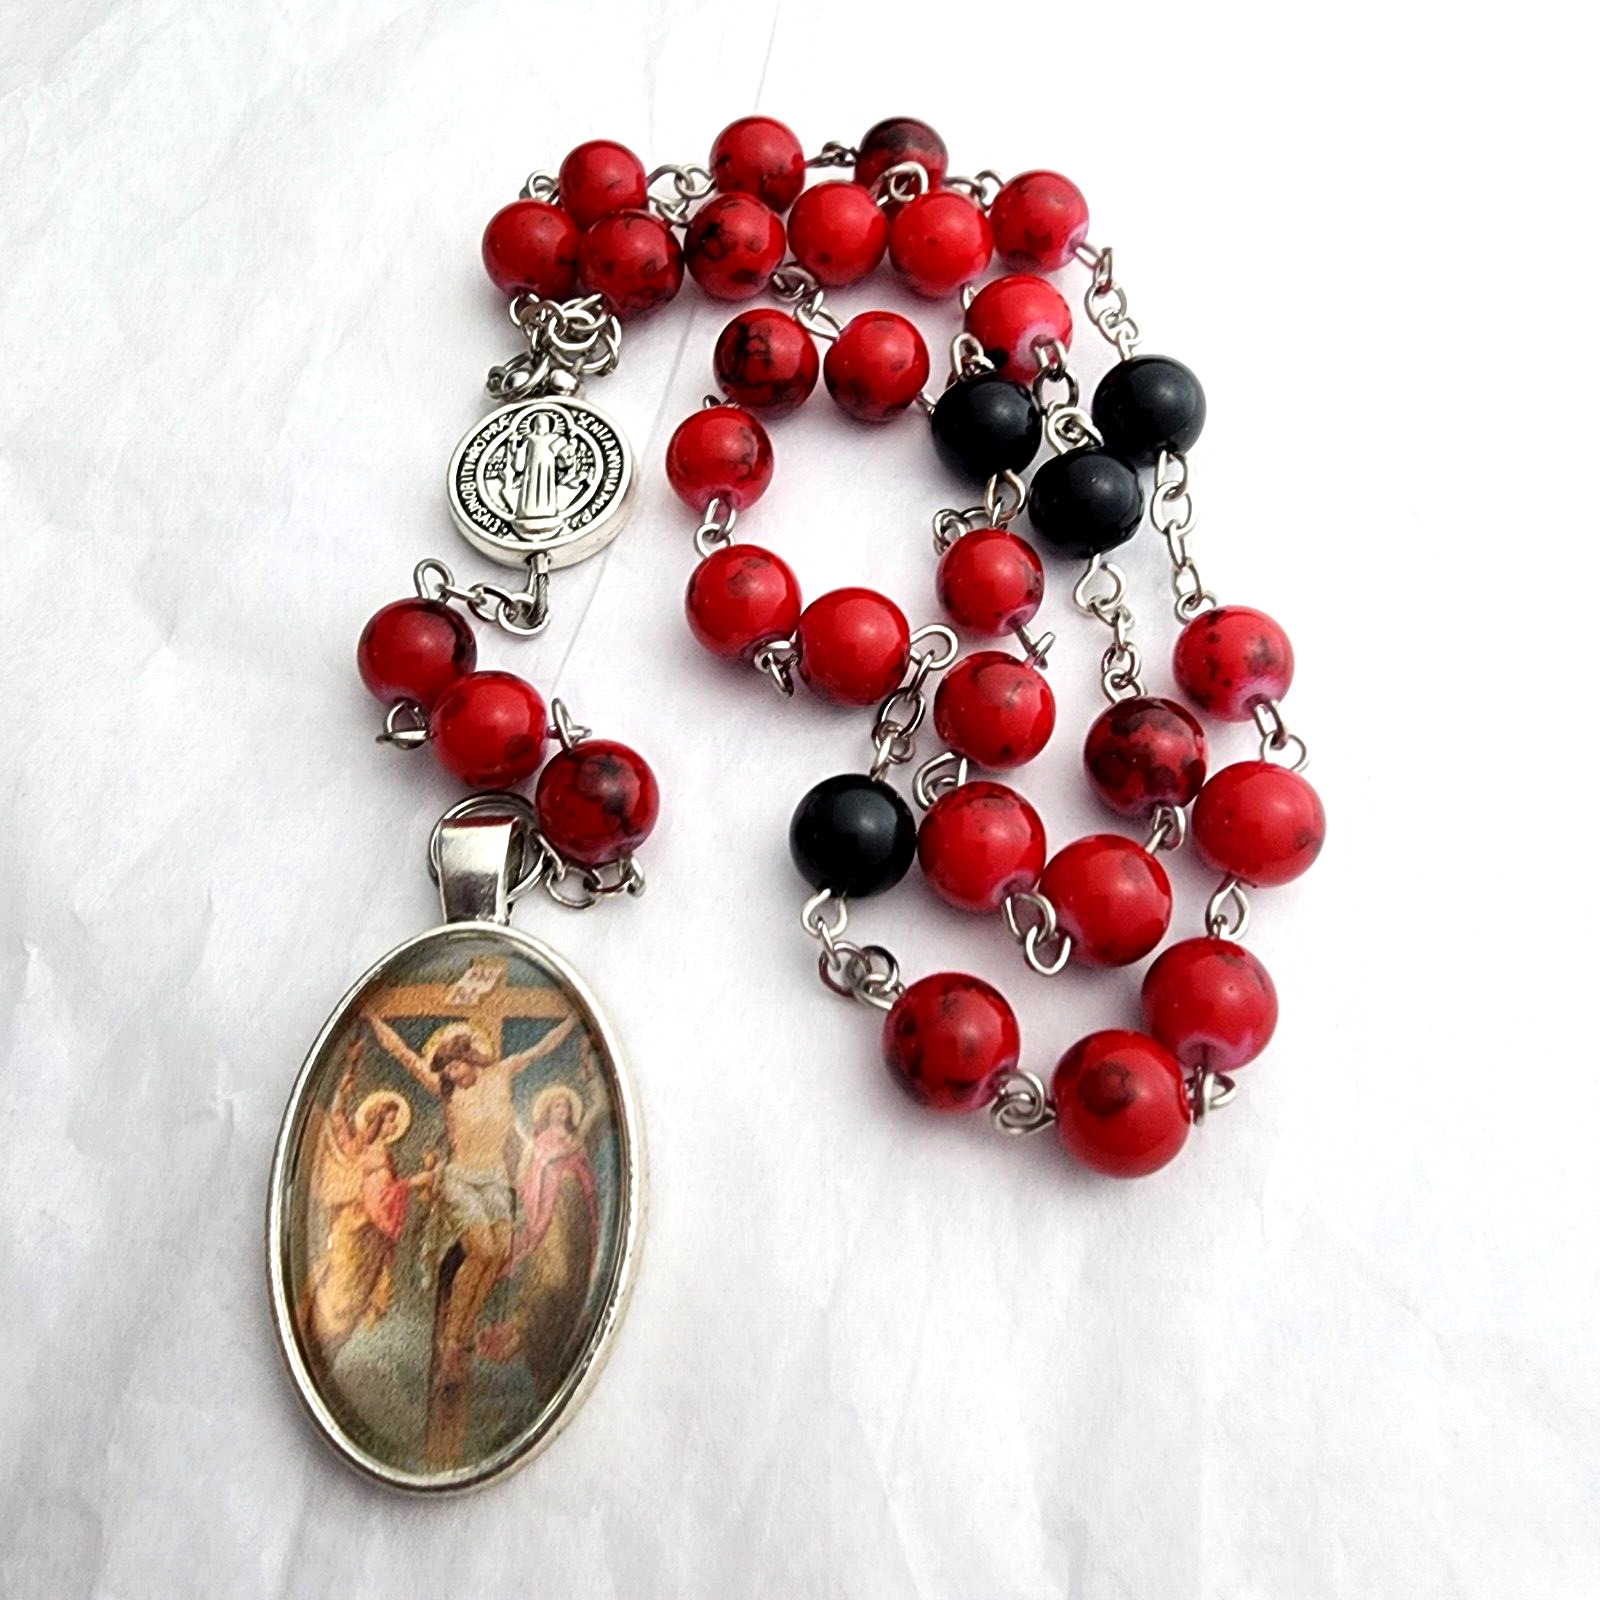 Handmade Five Wounds of Jesus Chaplet - Catholic Rosary Photo Cabochon Pendant